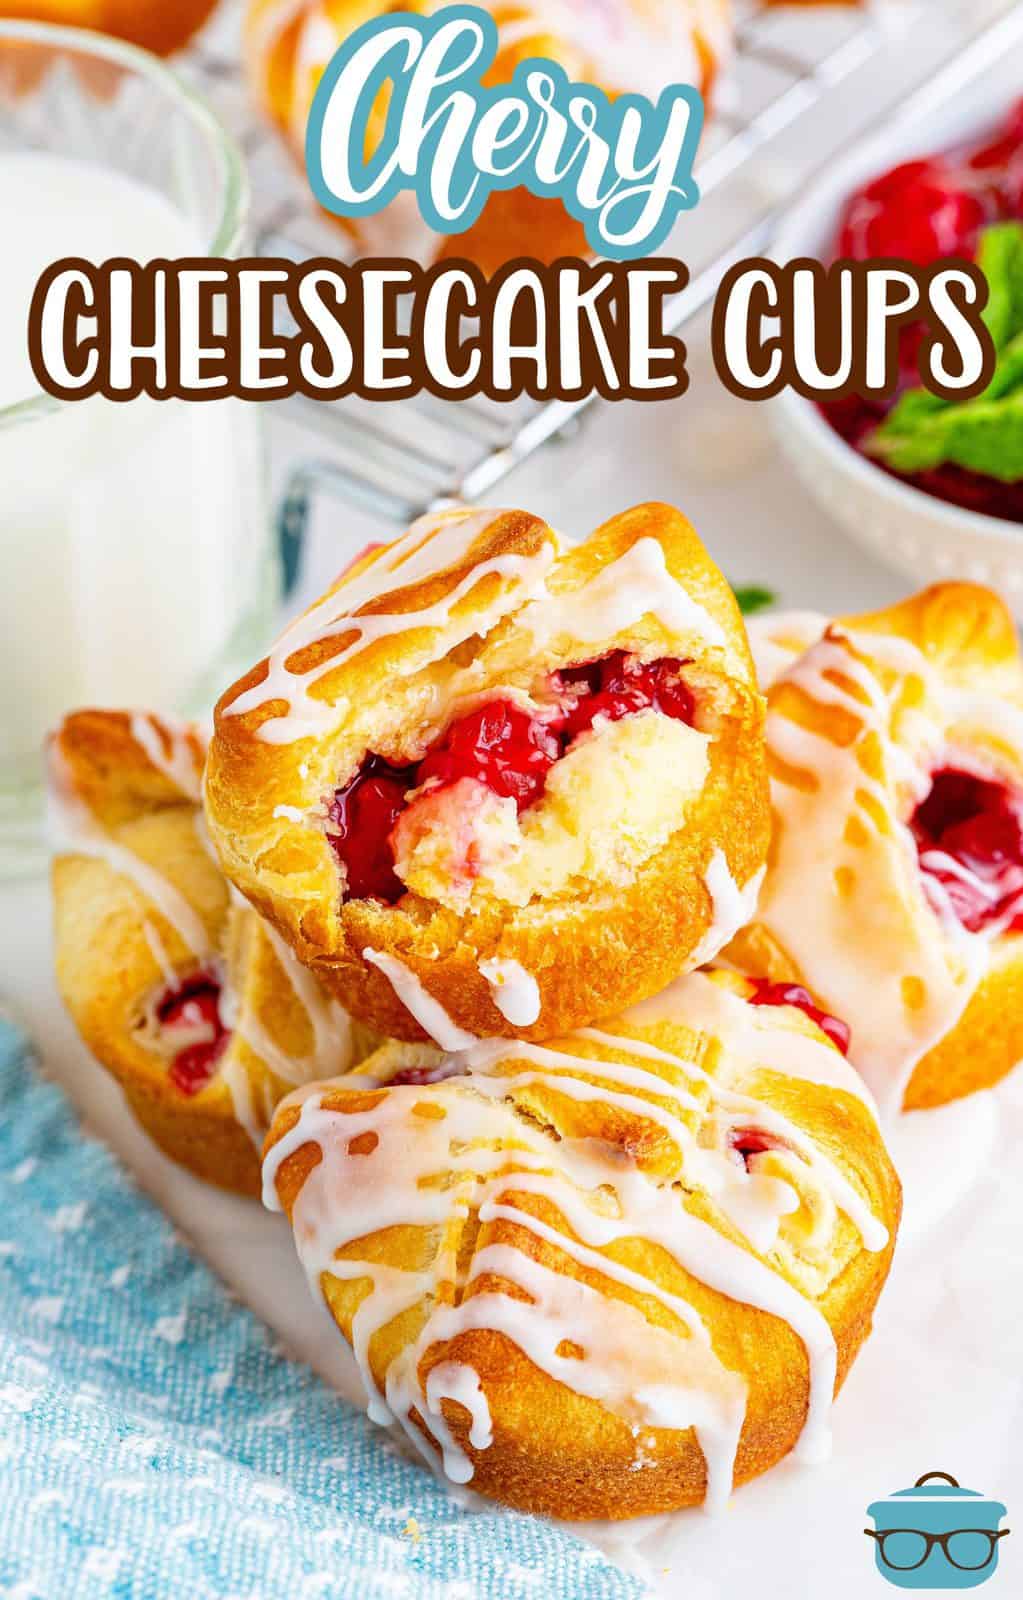 Immagine Pinterest di tazze Easy Cherry Cheesecake impilate sul vassoio.